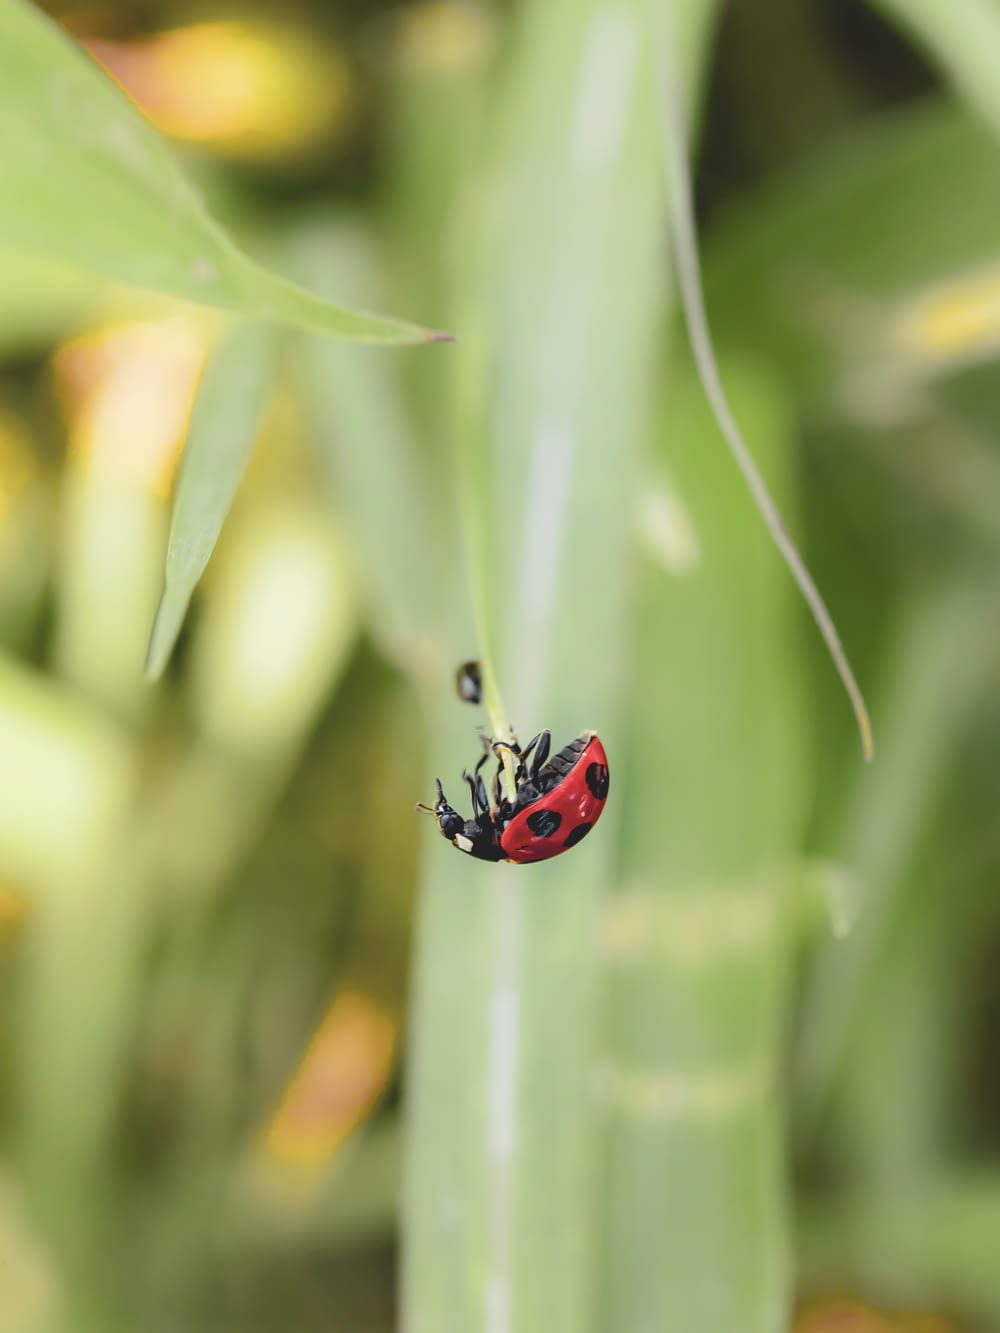 red and black ladybug on green leaf during daytime